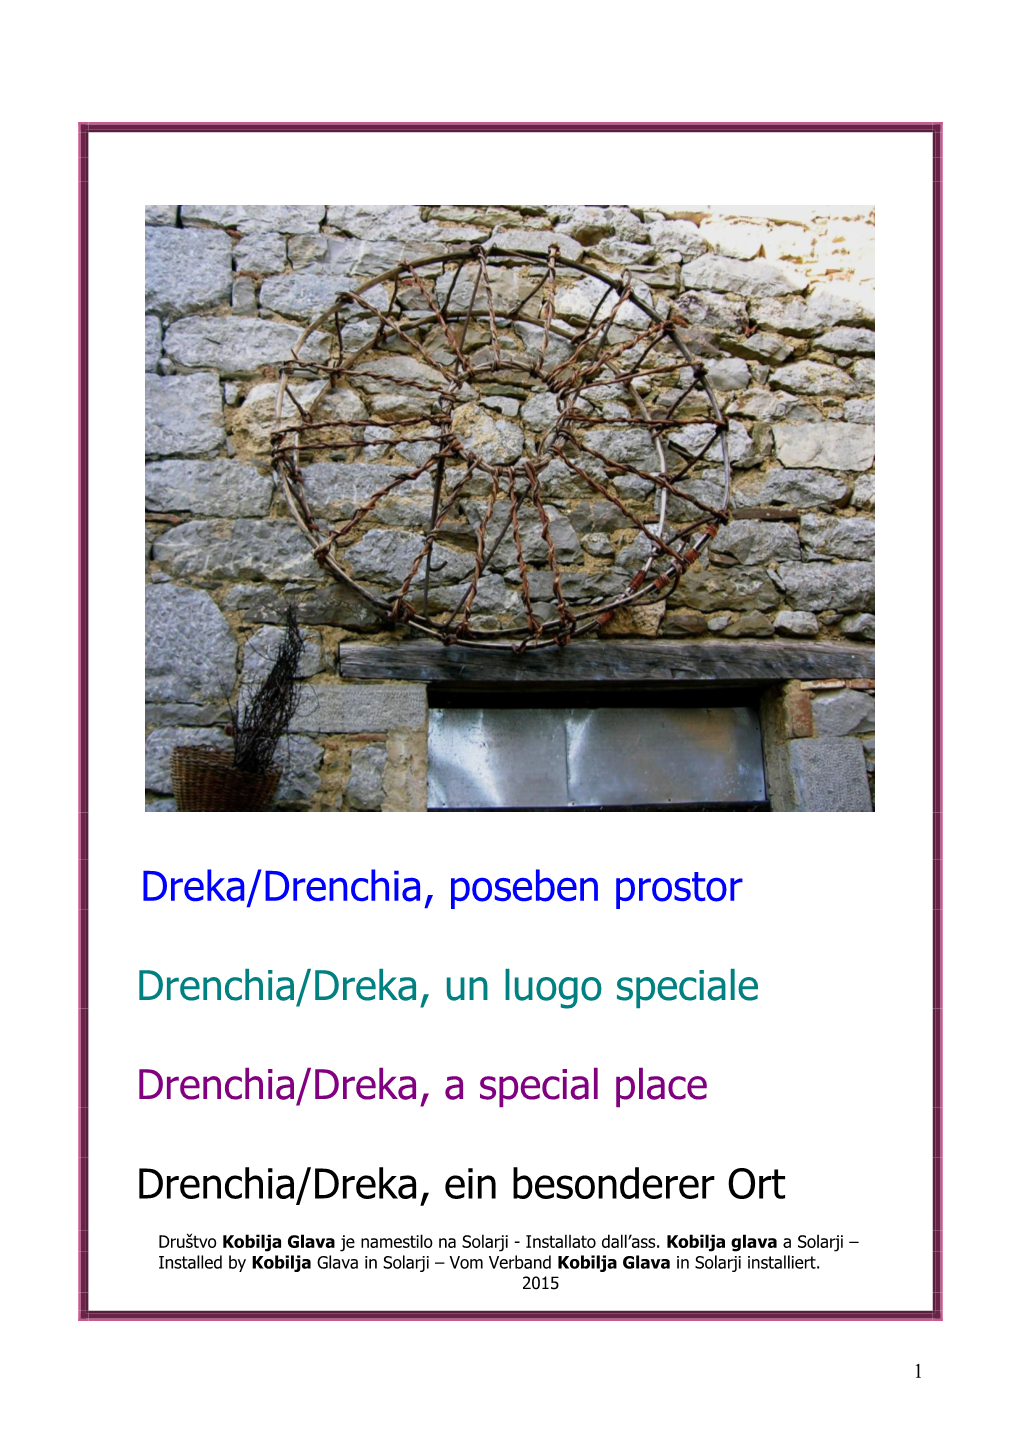 Dreka/Drenchia, Poseben Prostor